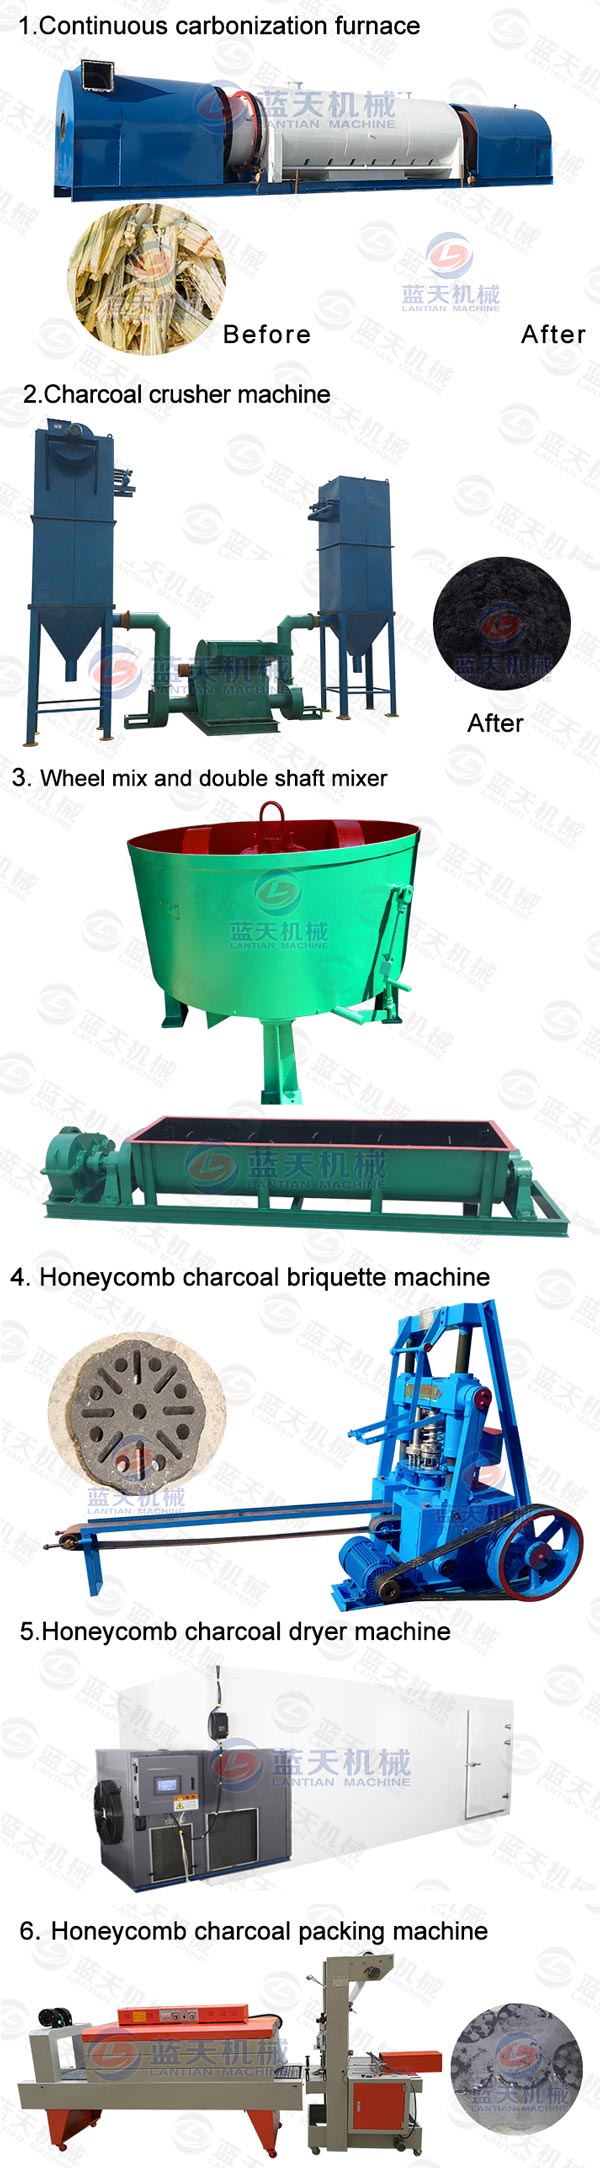 Production process of honeycomb charcoal briquette machine